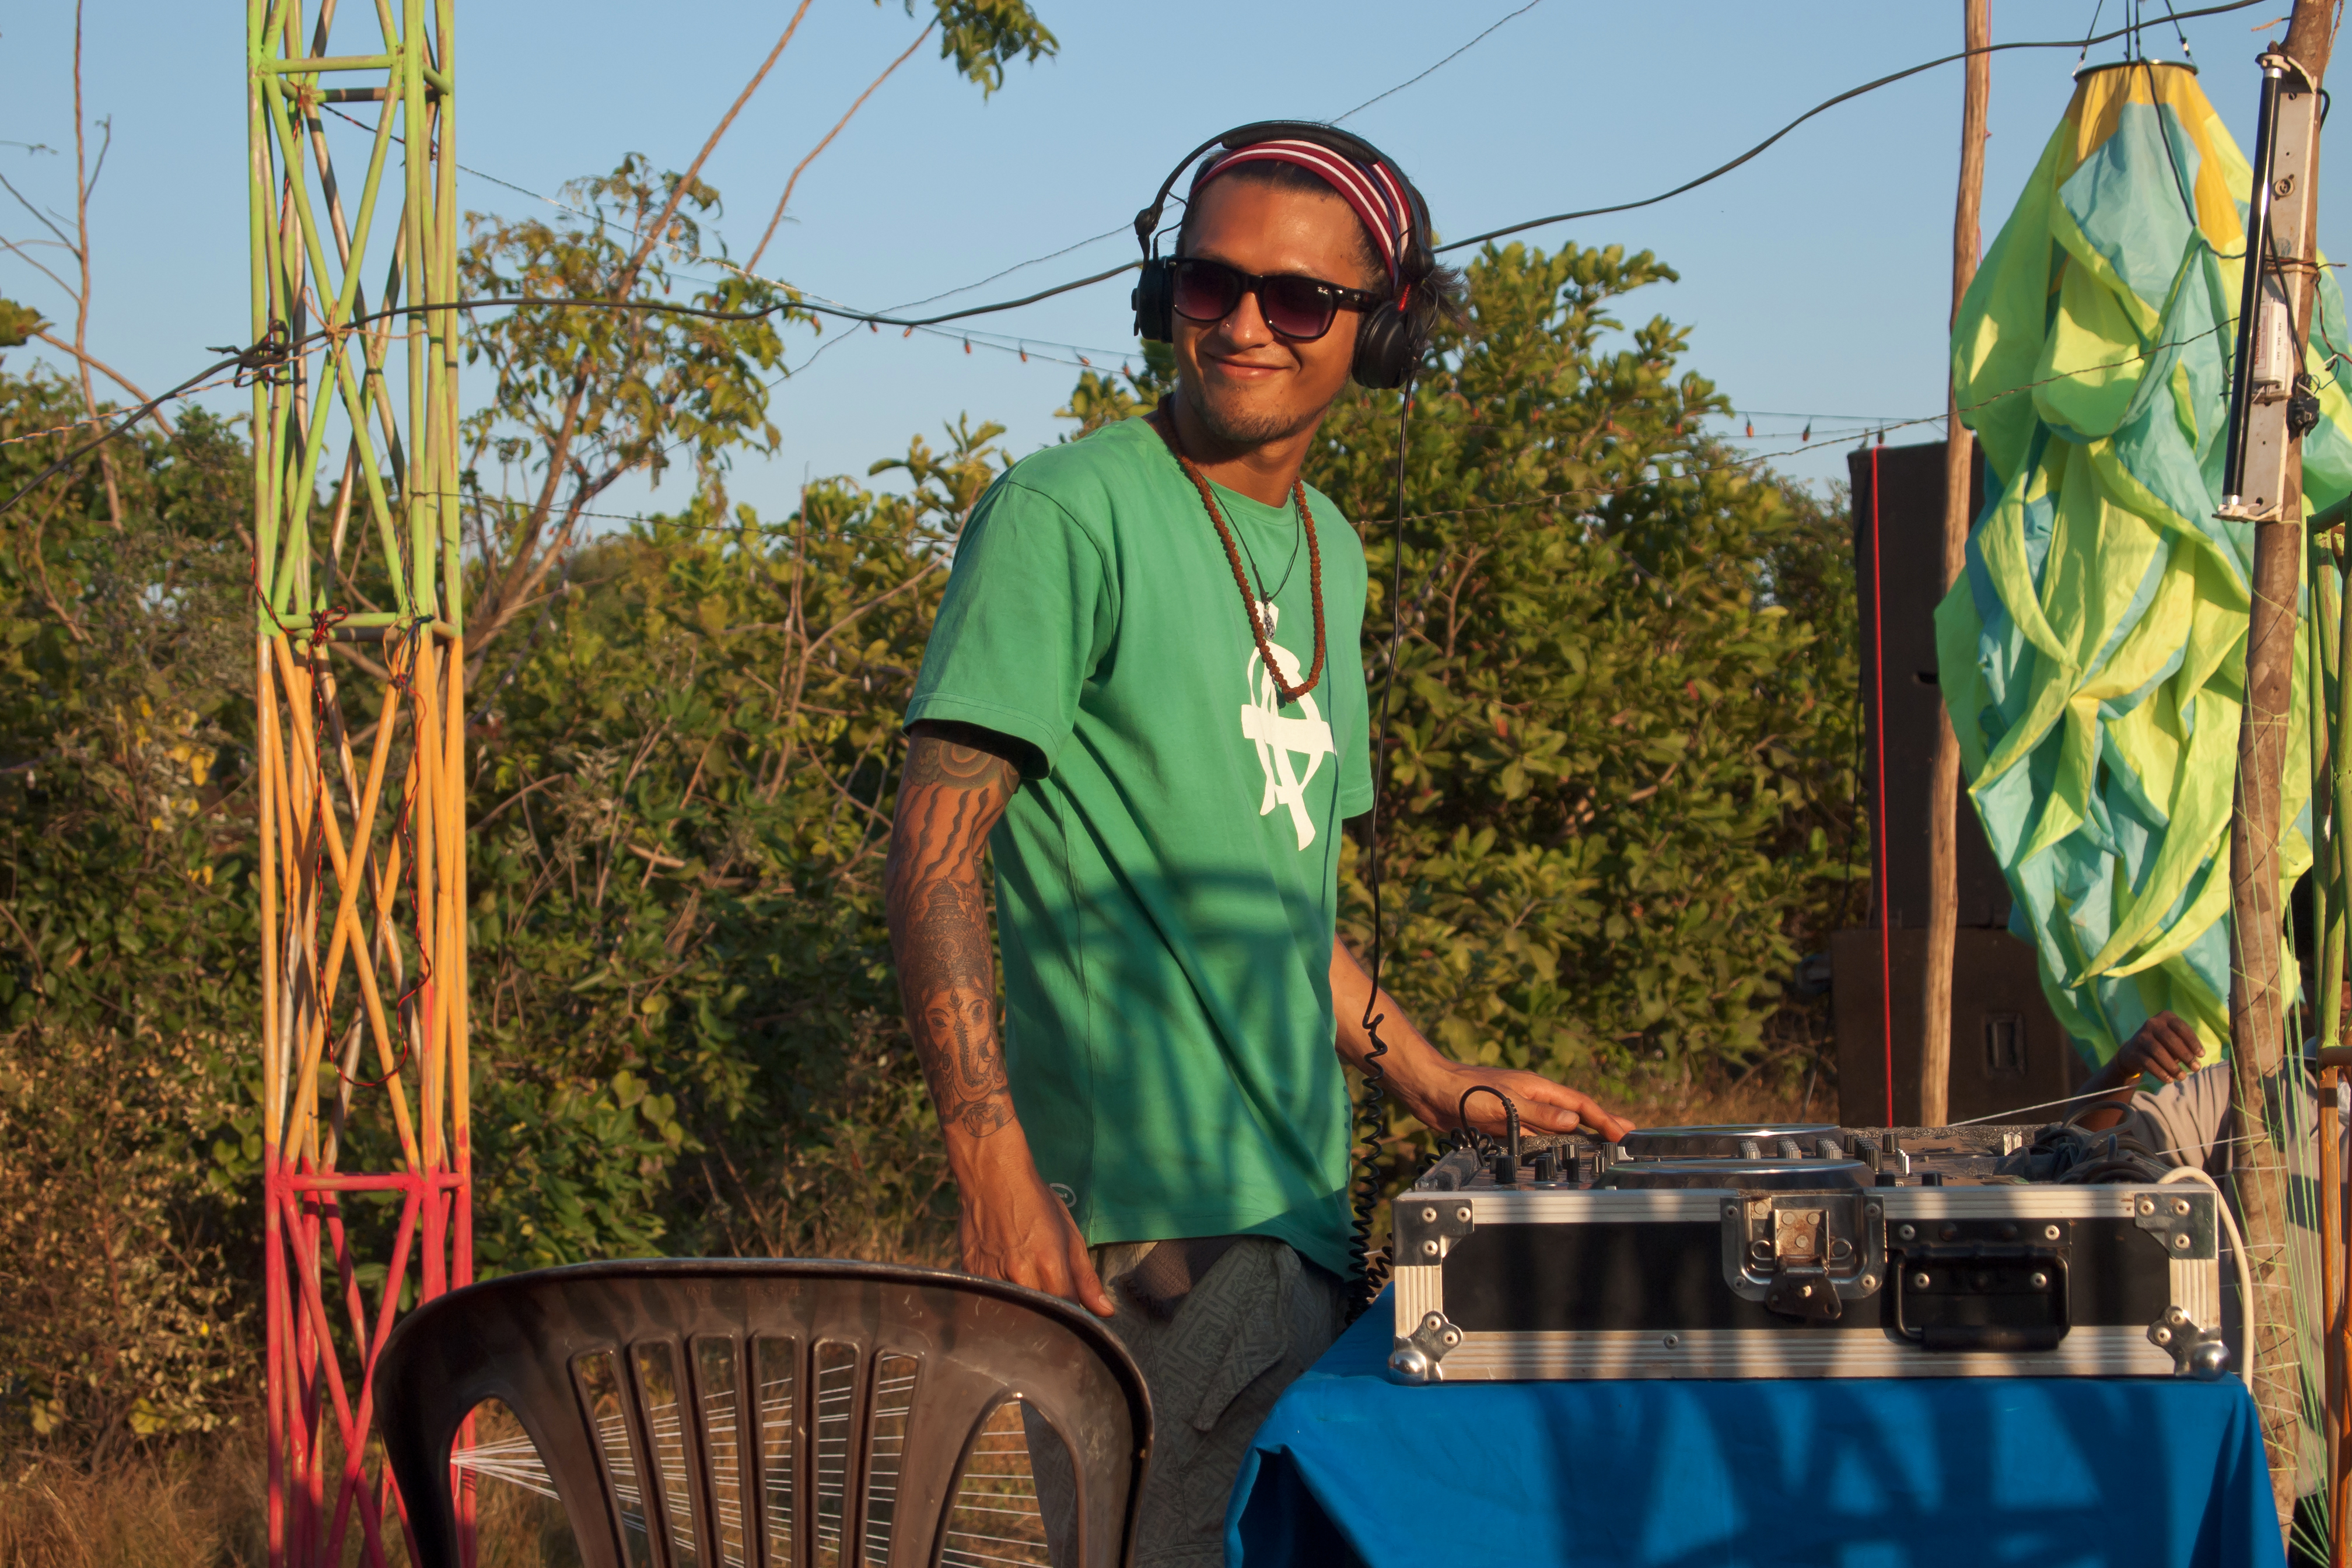 File:Vagator, Goa, India, DJ playing trance music.jpg - Wikipedia